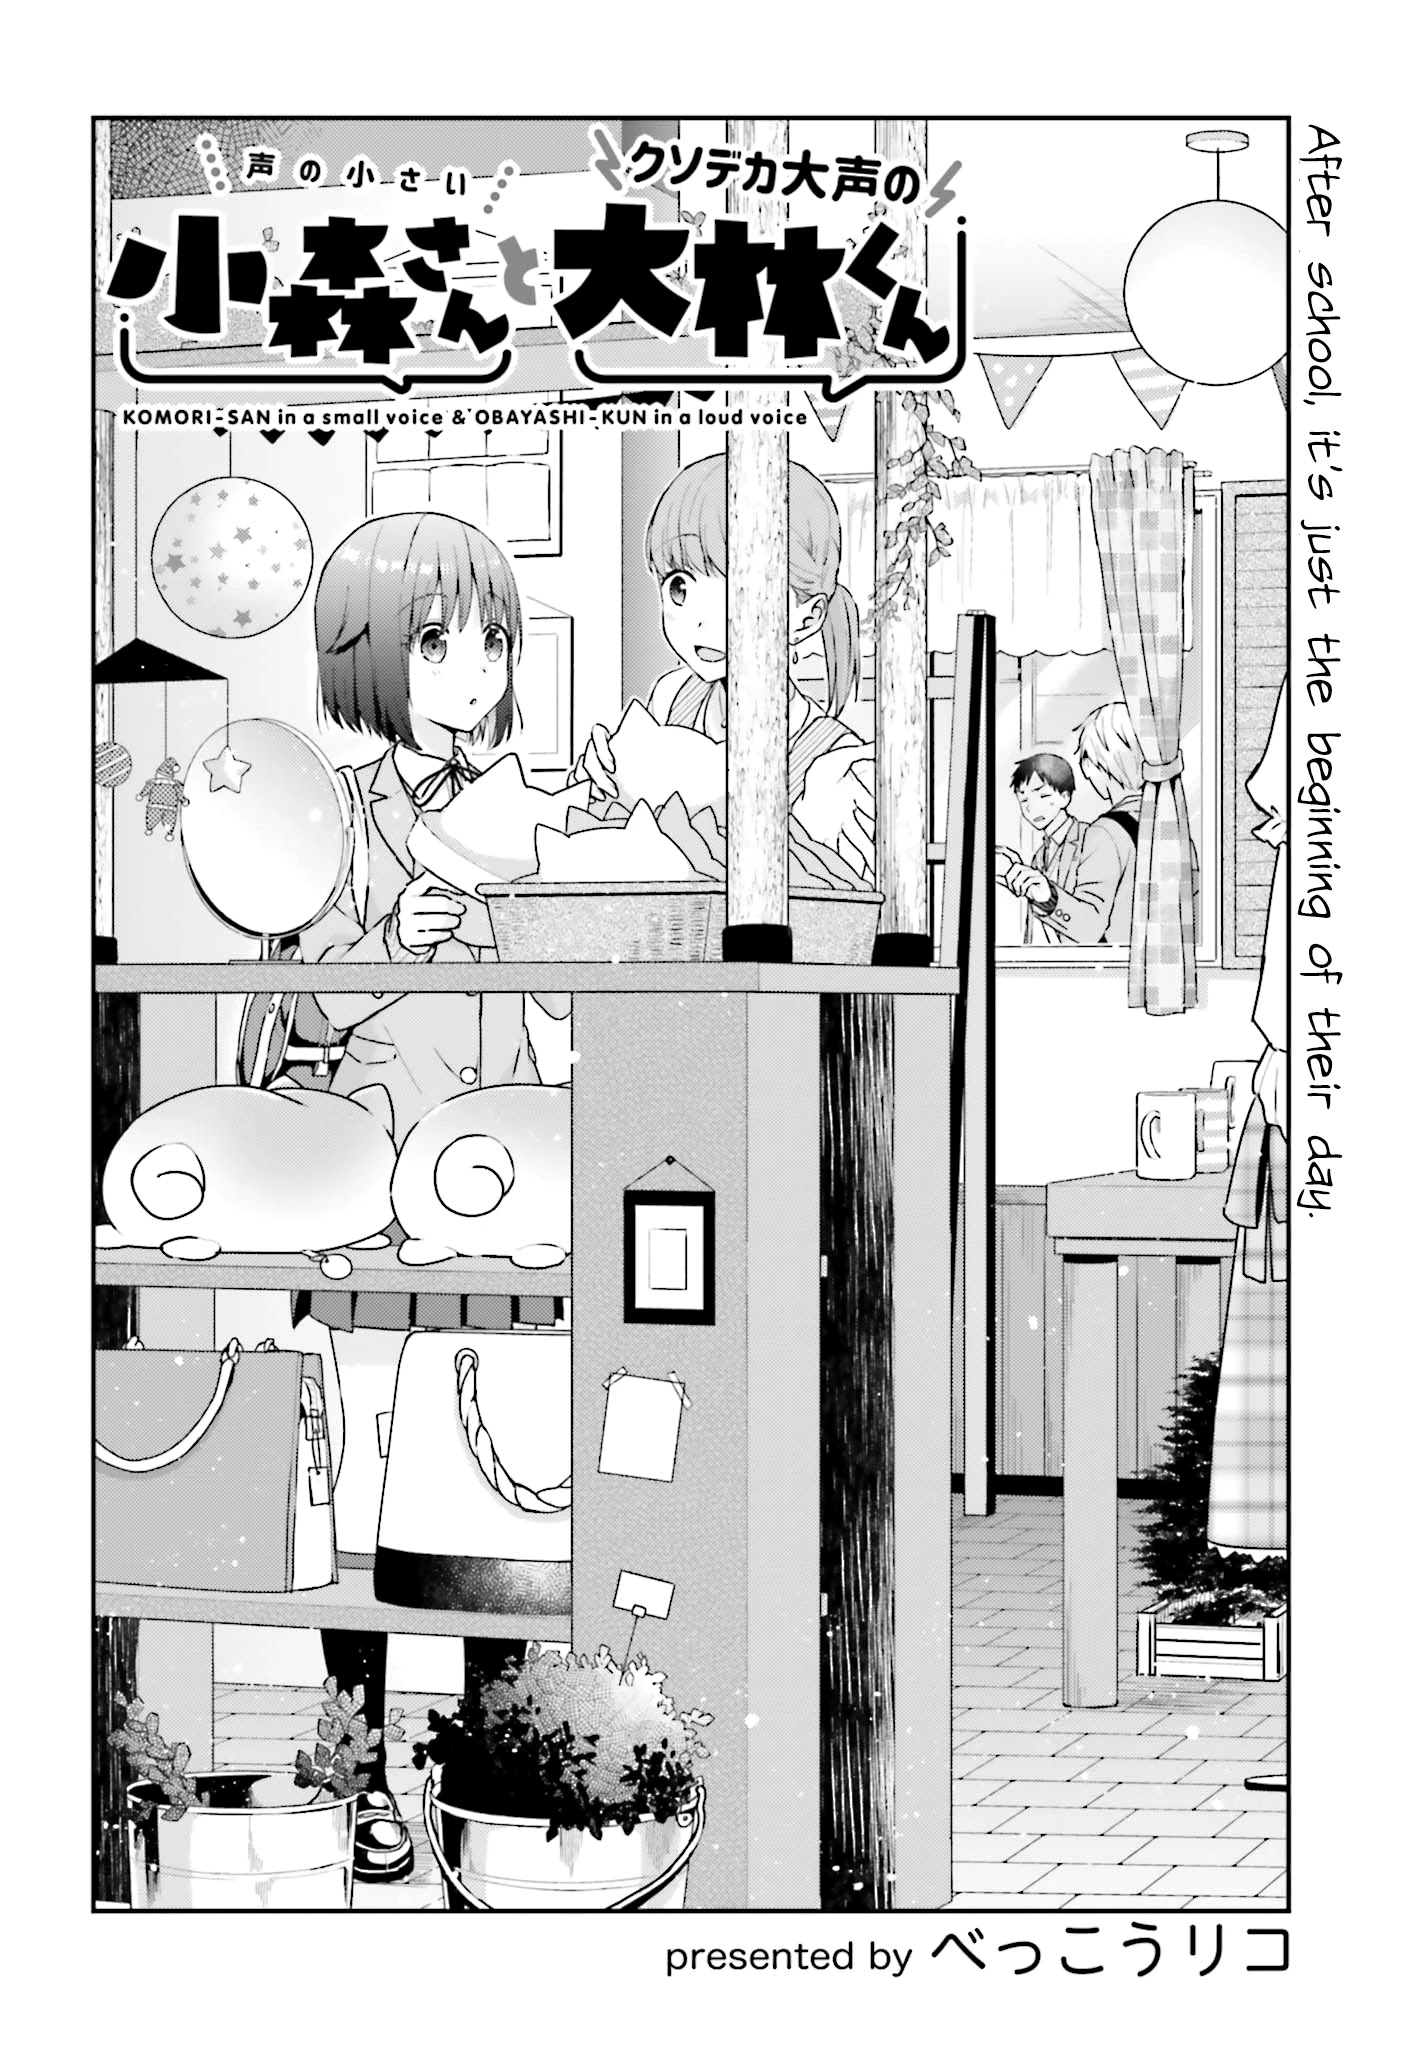 The Quiet Komori-San And The Loud Oobayashi-Kun - Page 1